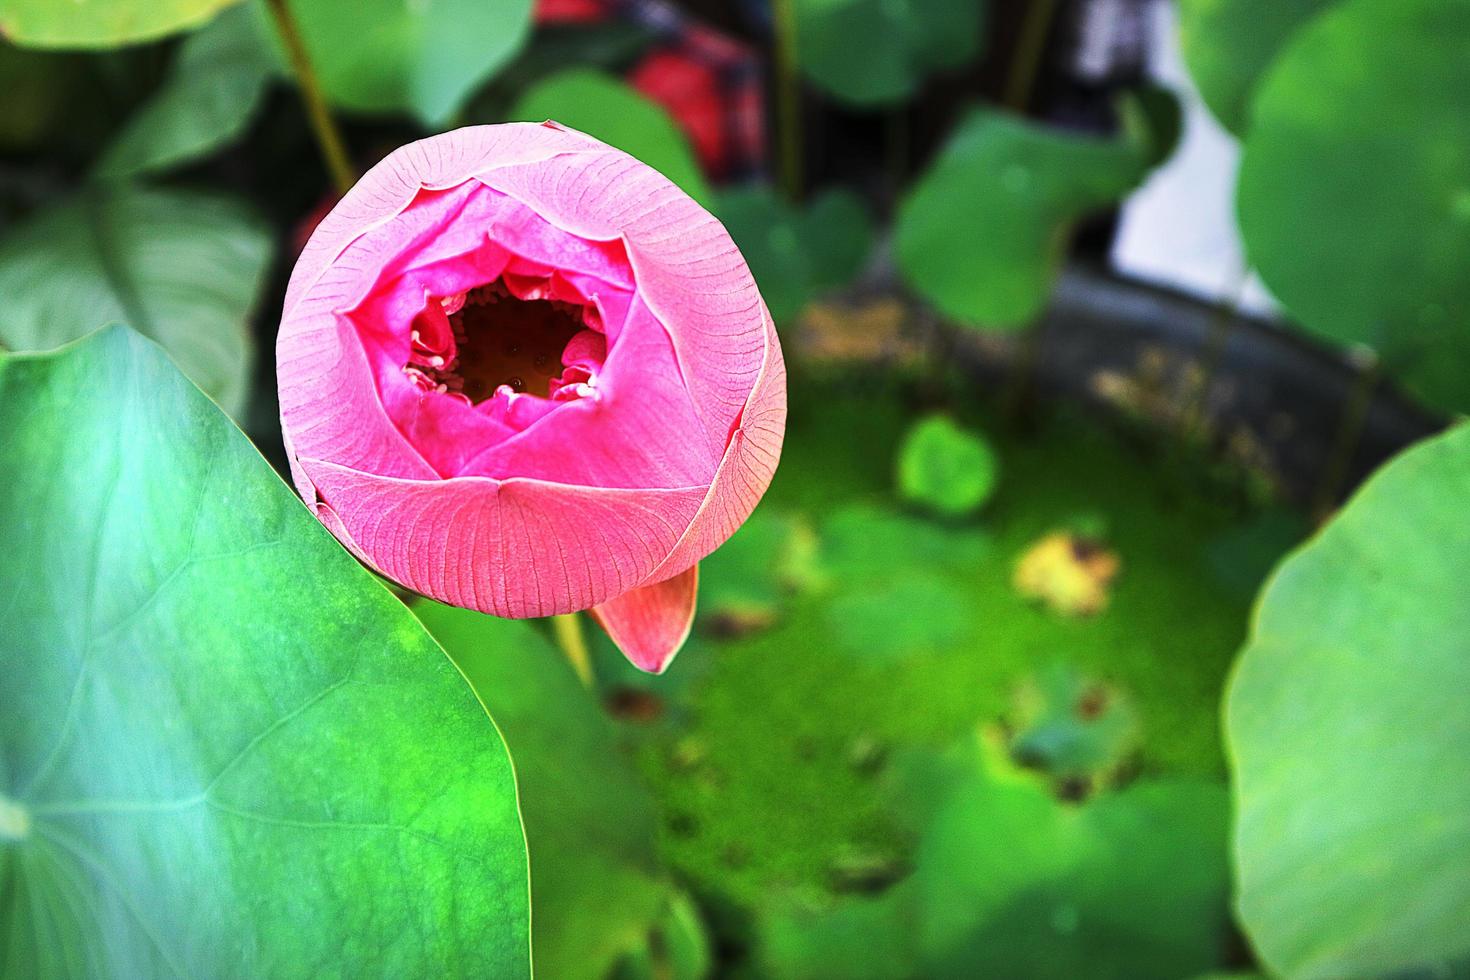 flor de lótus rosa folha verde no jardim. foto